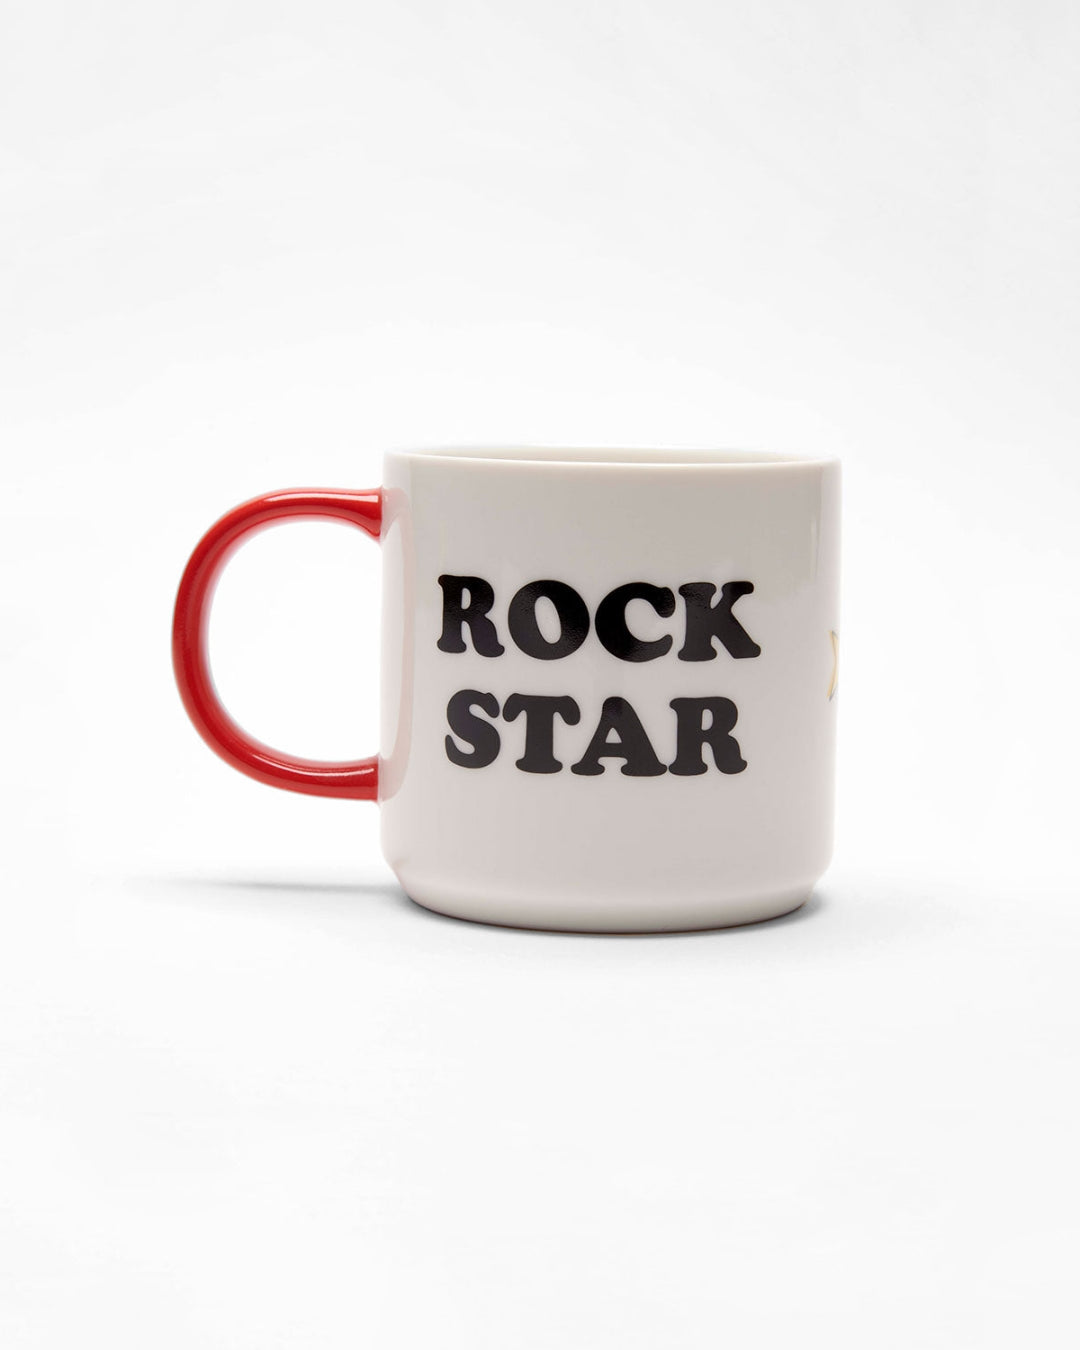 Peanuts Mug - Rock Star [PRE ORDER]